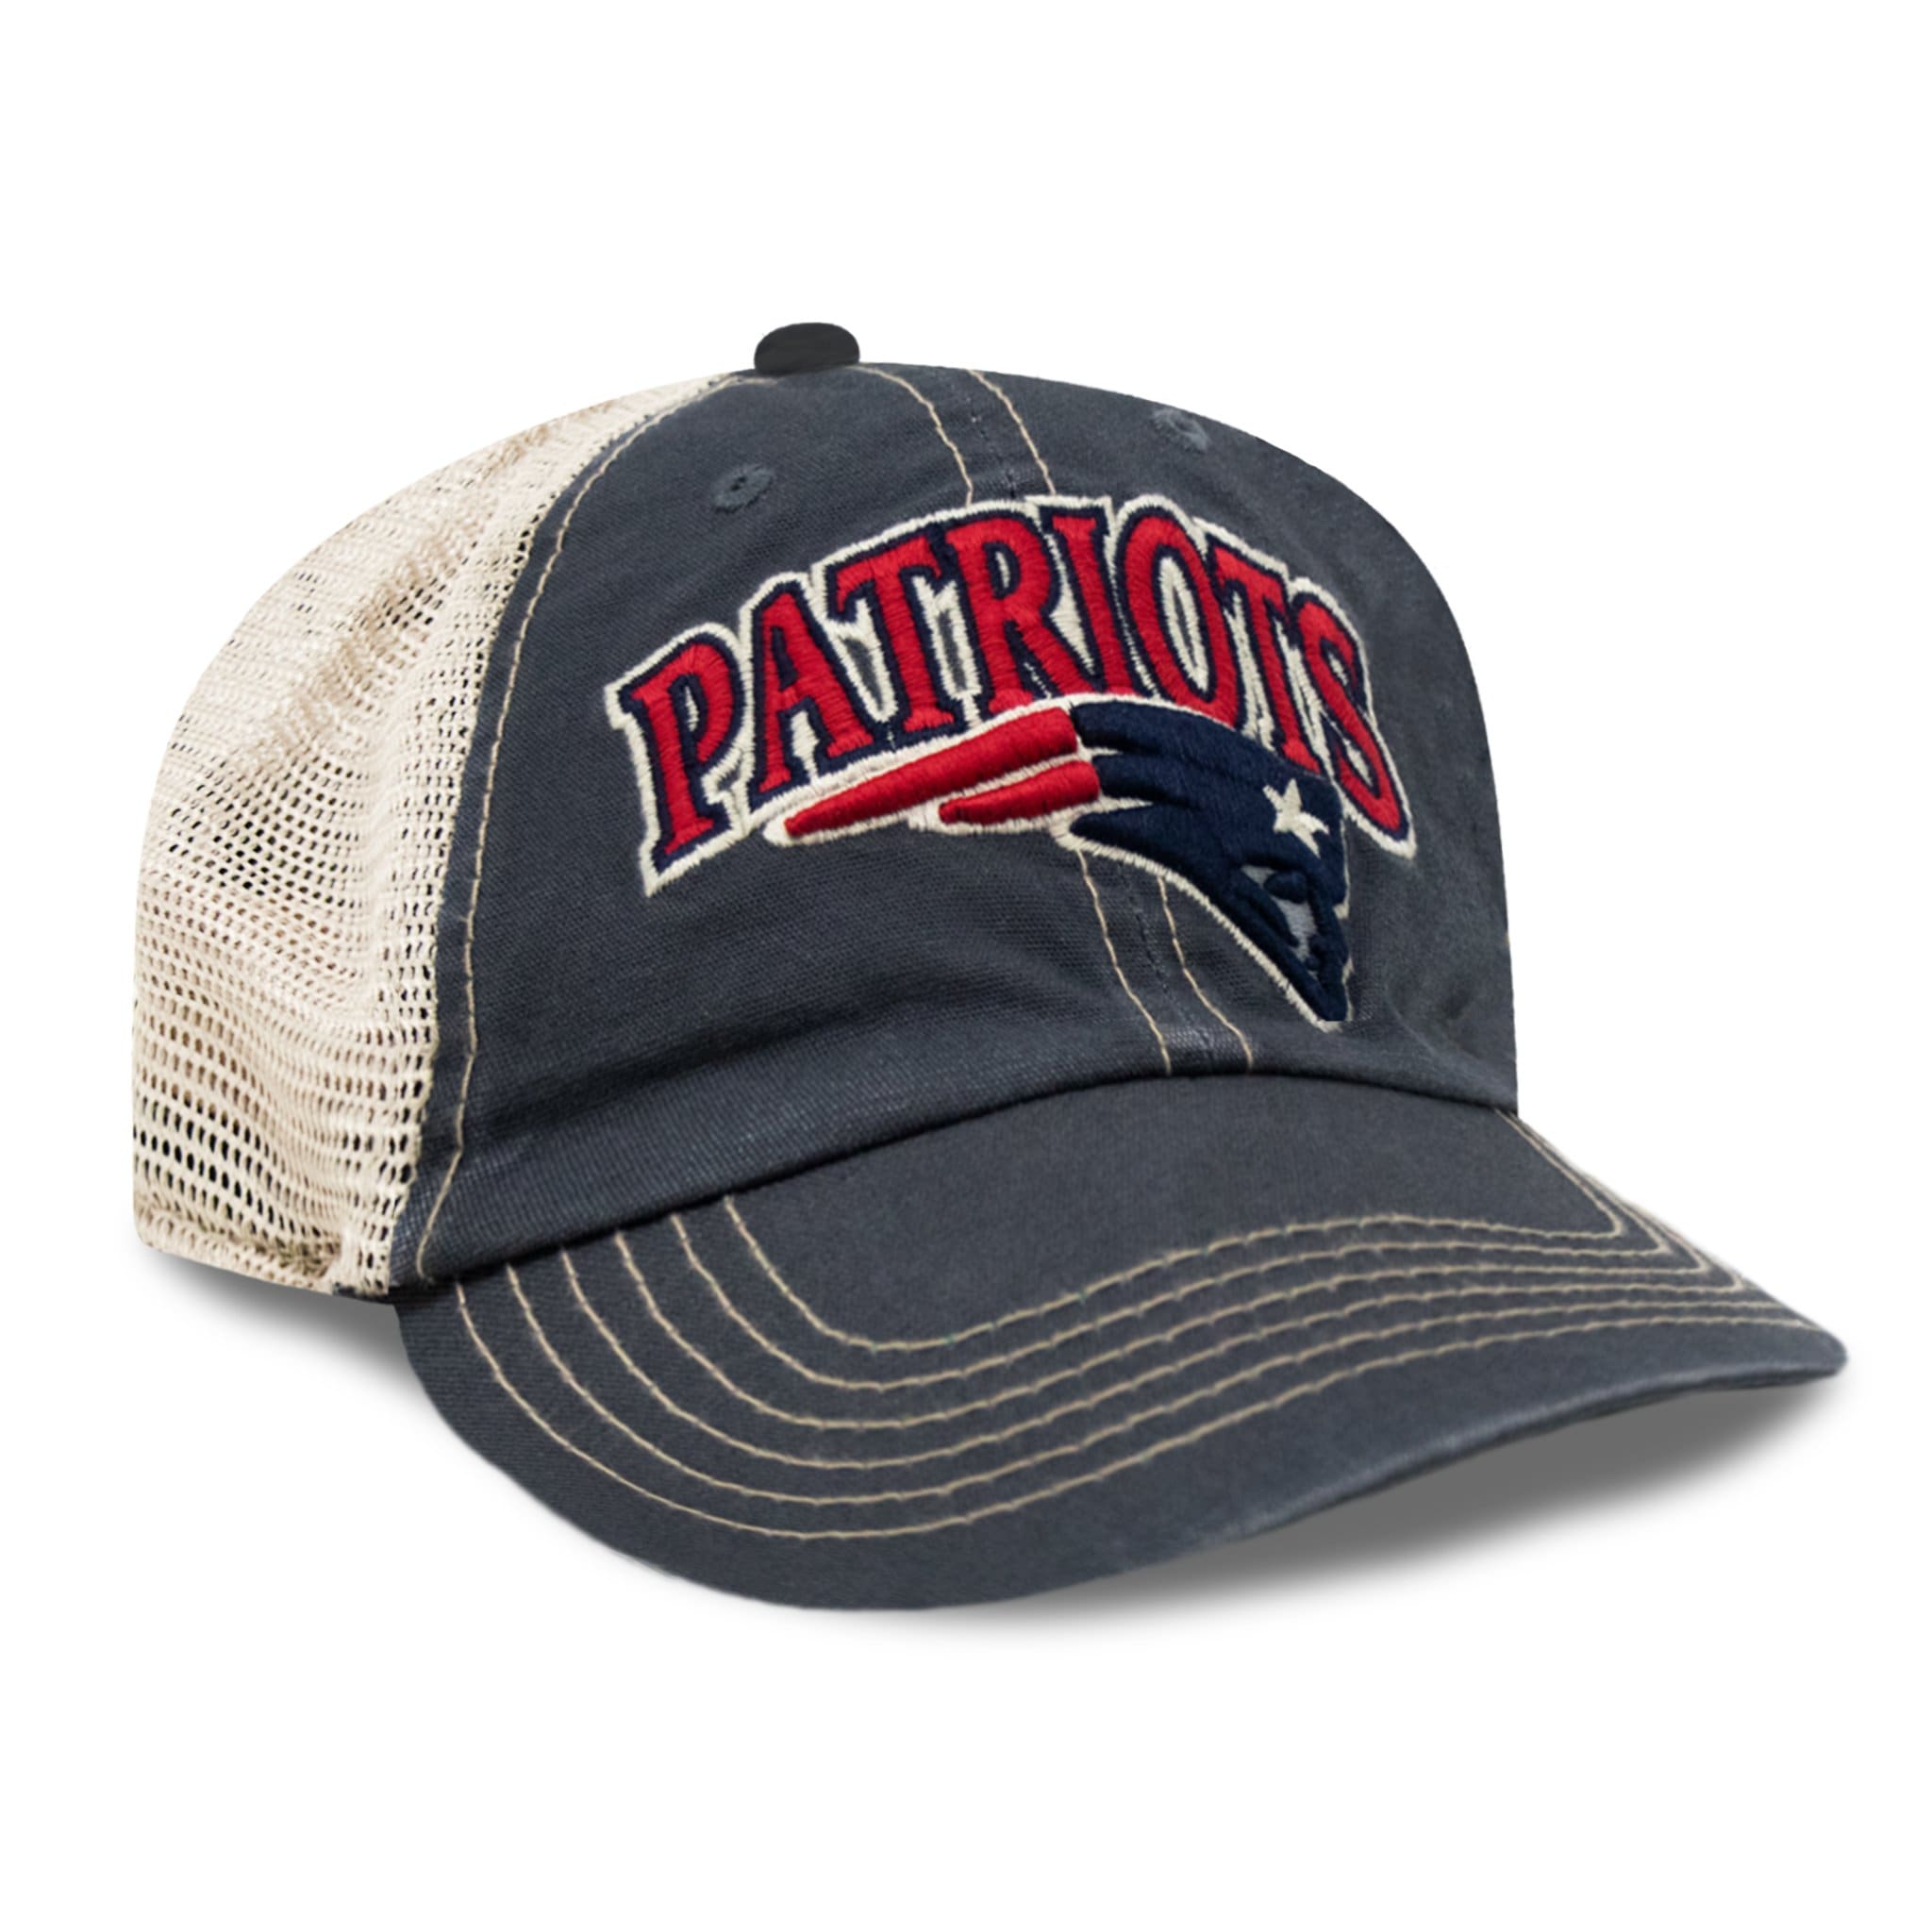 Vintage NFL New England Patriots Cap